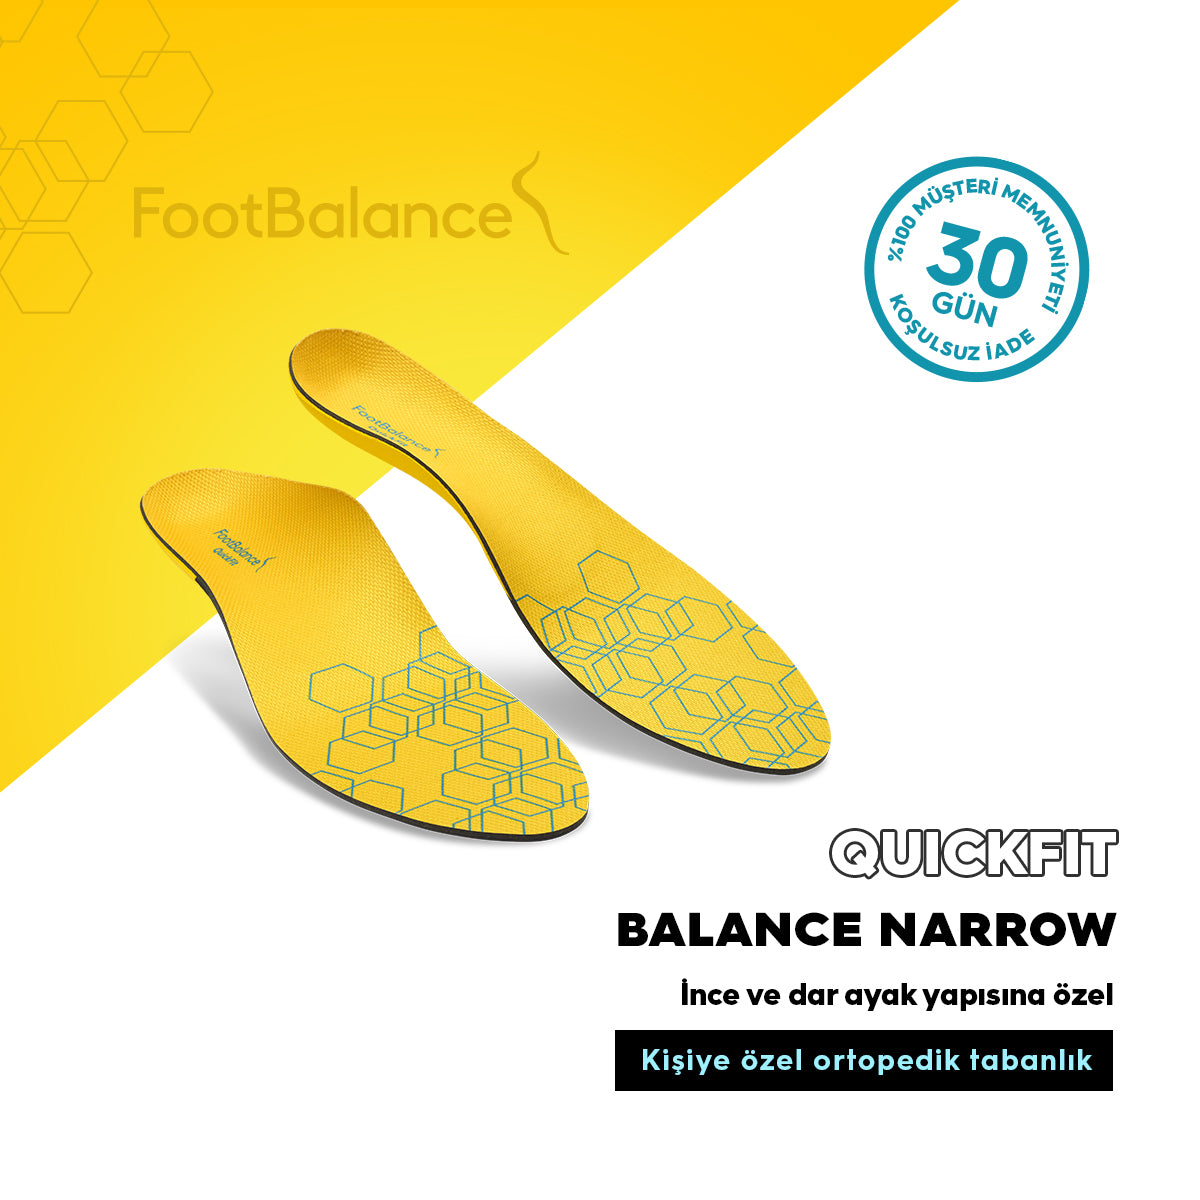 FootBalance QuickFit Balance Narrow ortopedik tabanlık